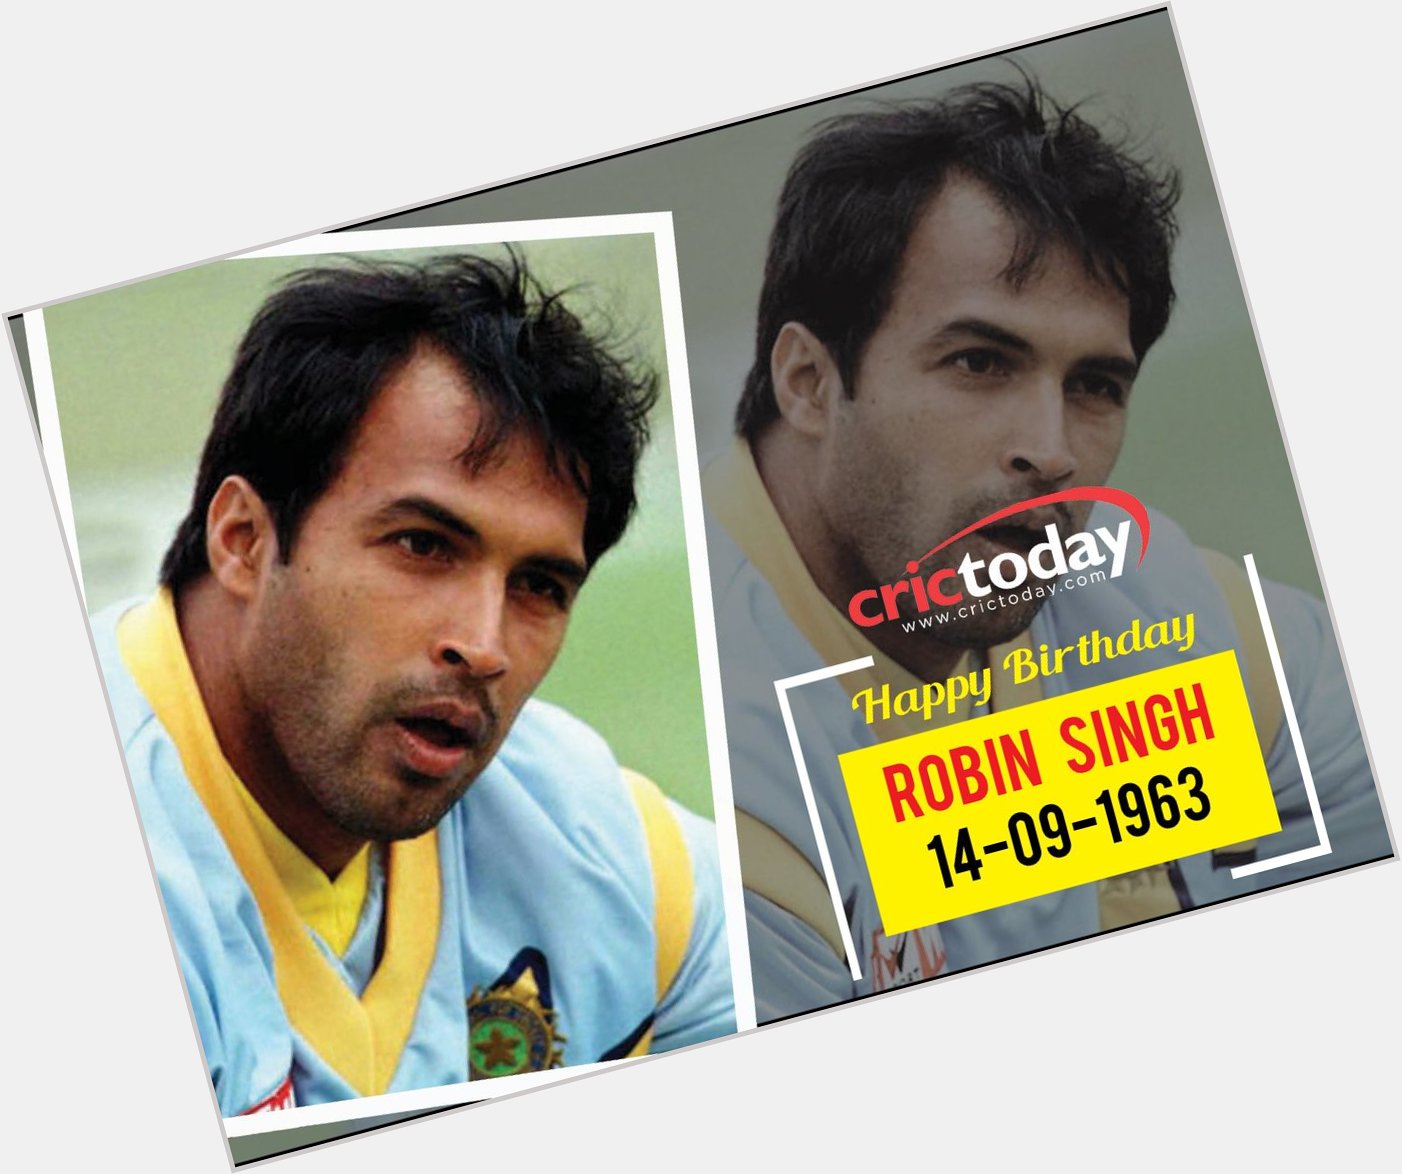  Happy Birthday Robin Singh 